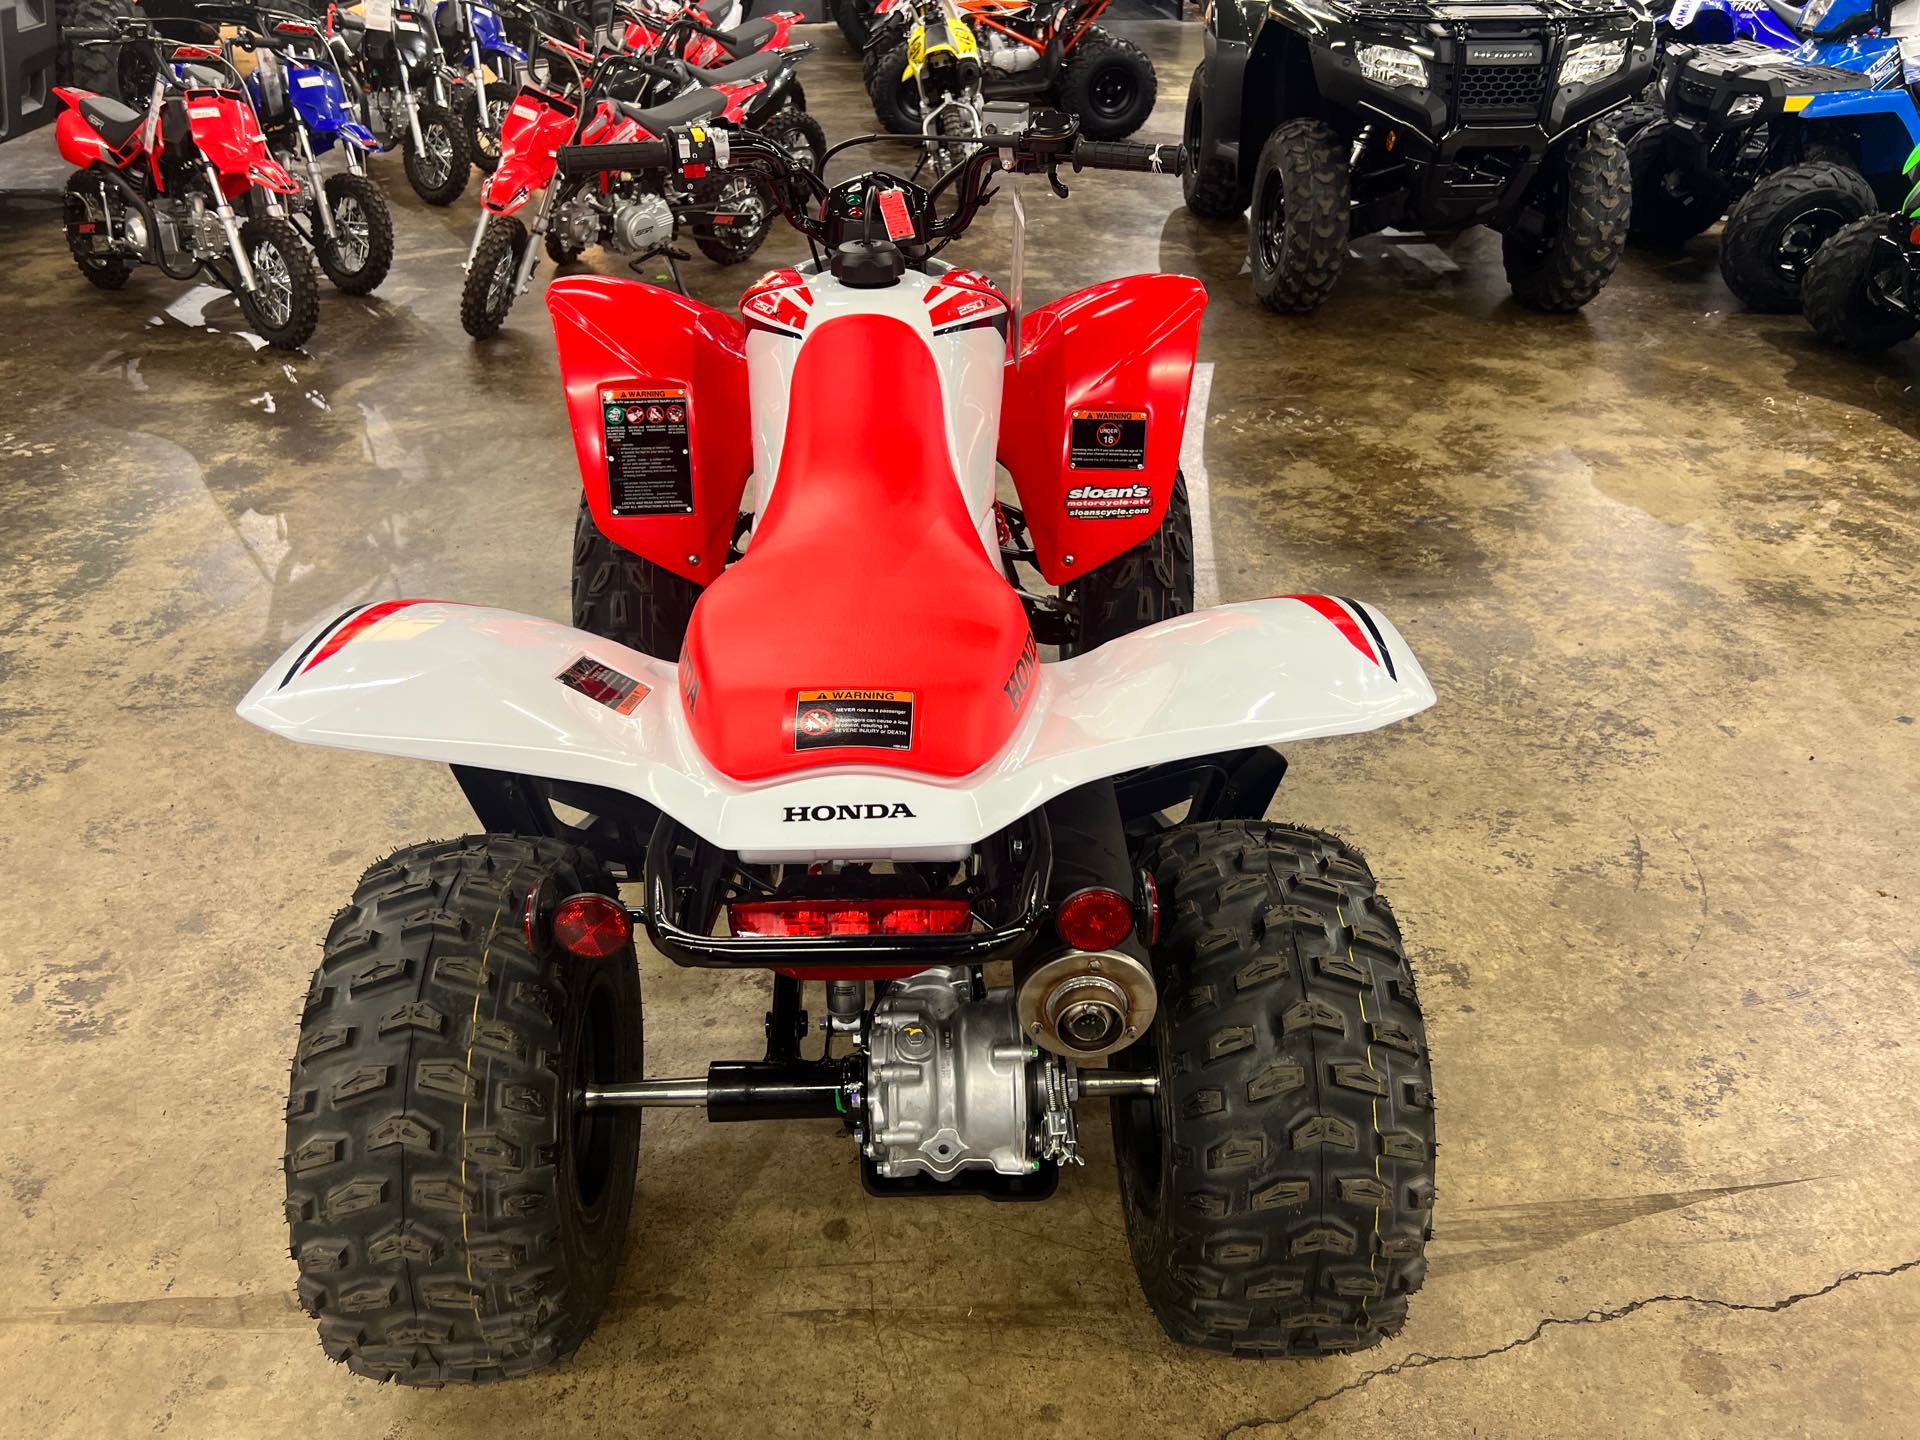 2024 Honda TRX 250X Sloan's Motorcycle ATV